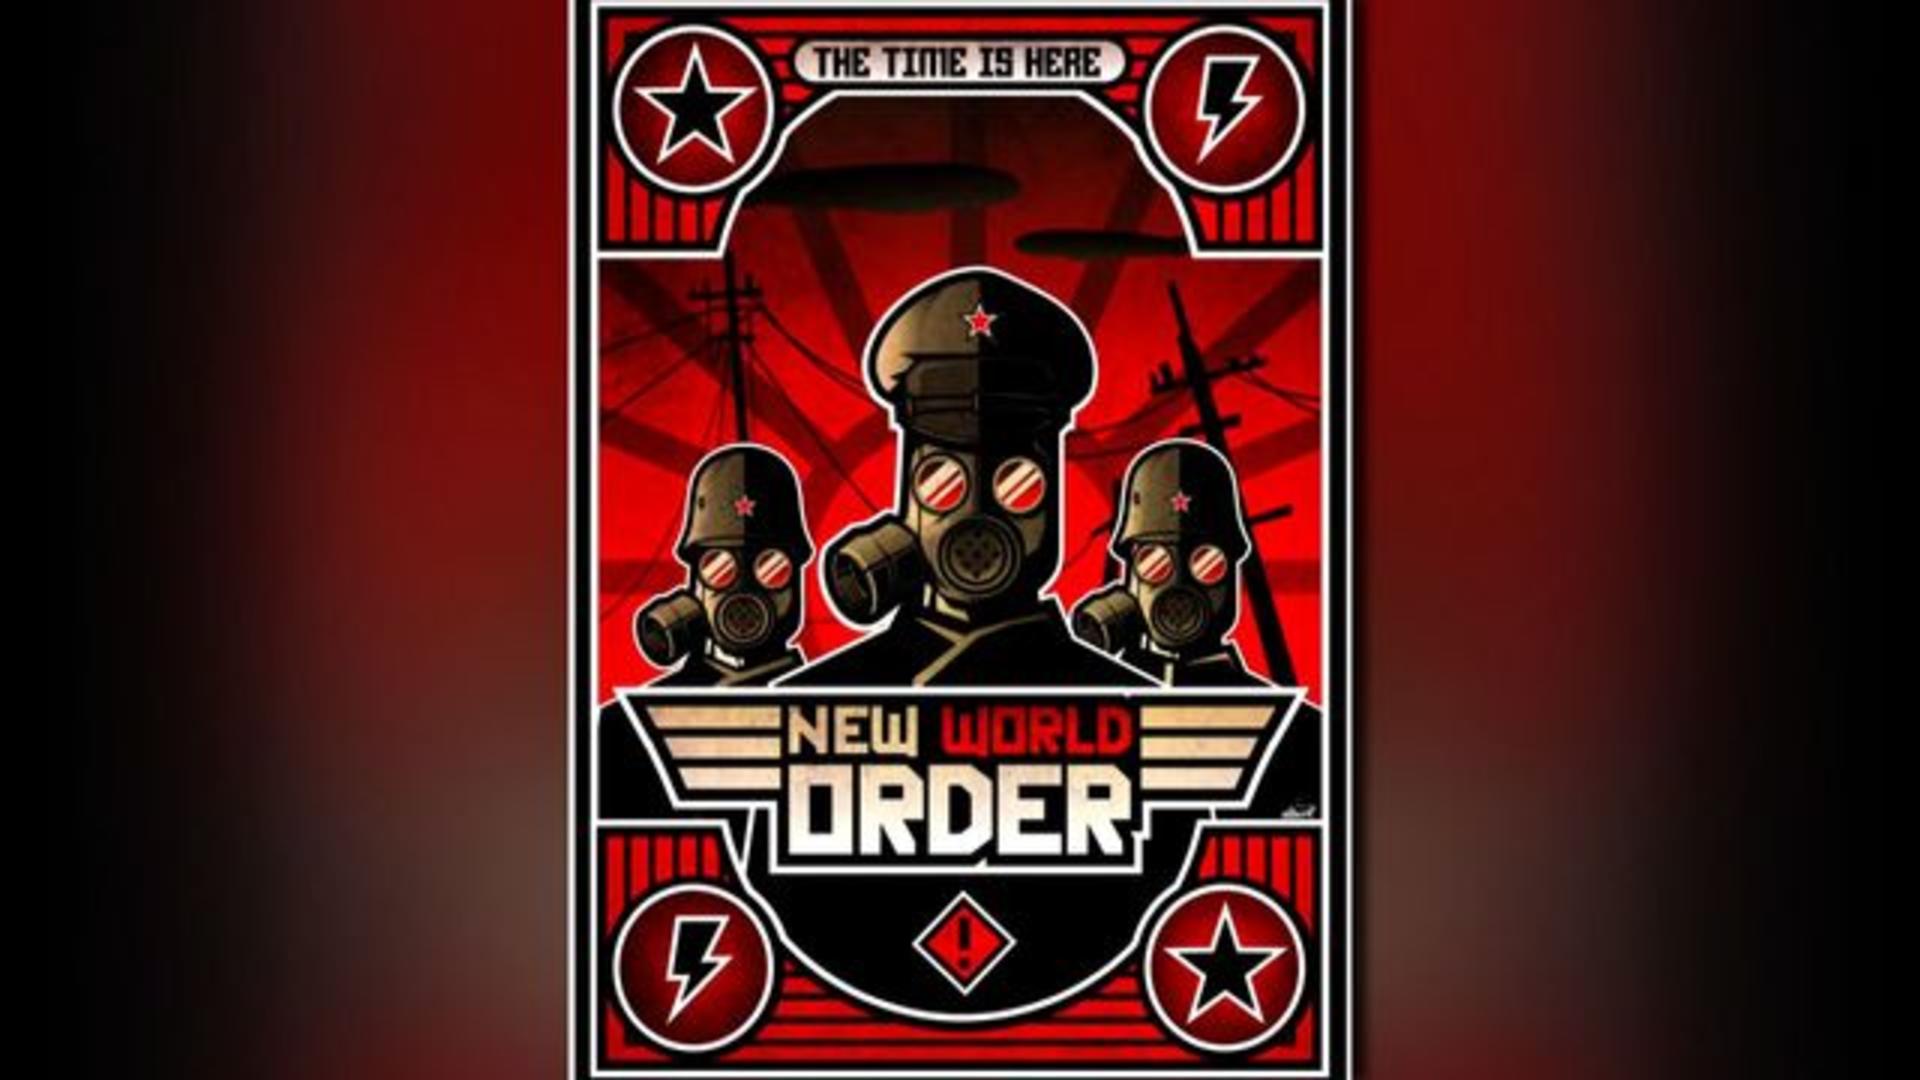 New world order 2021